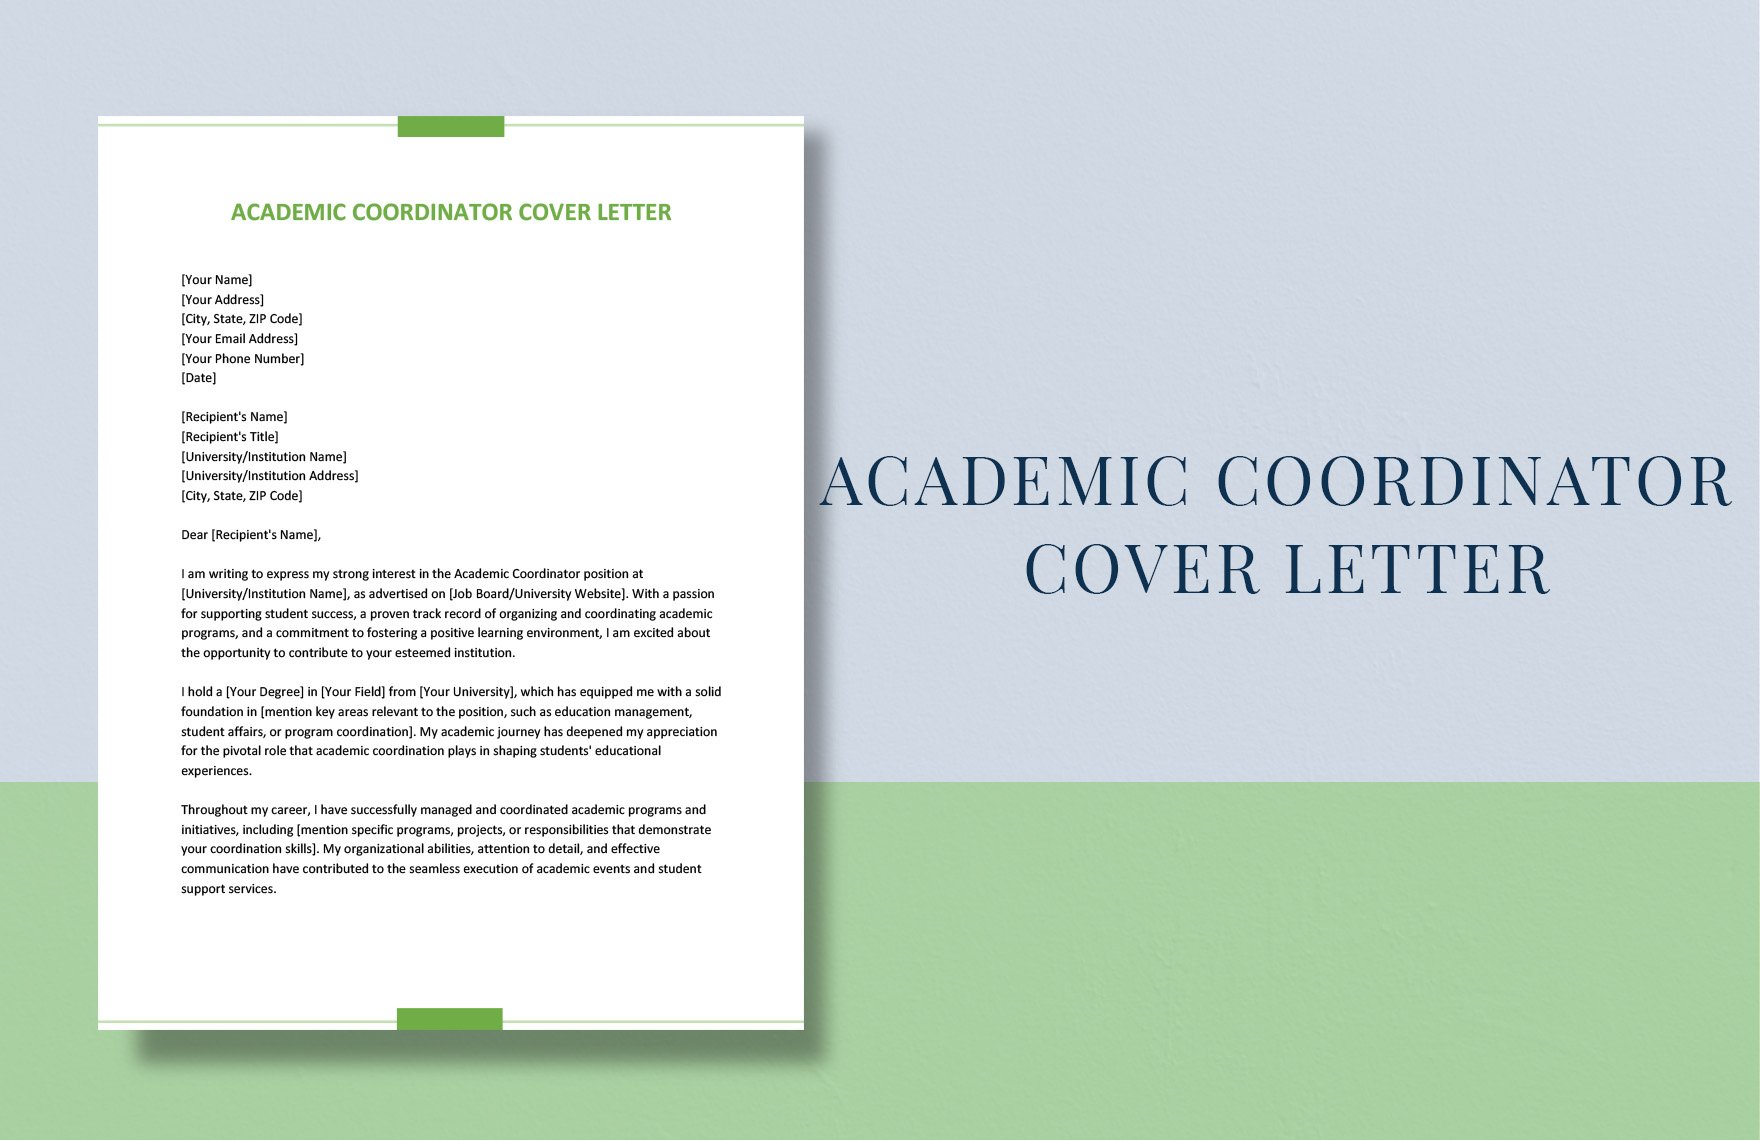 Academic Coordinator Cover Letter in Word, Google Docs